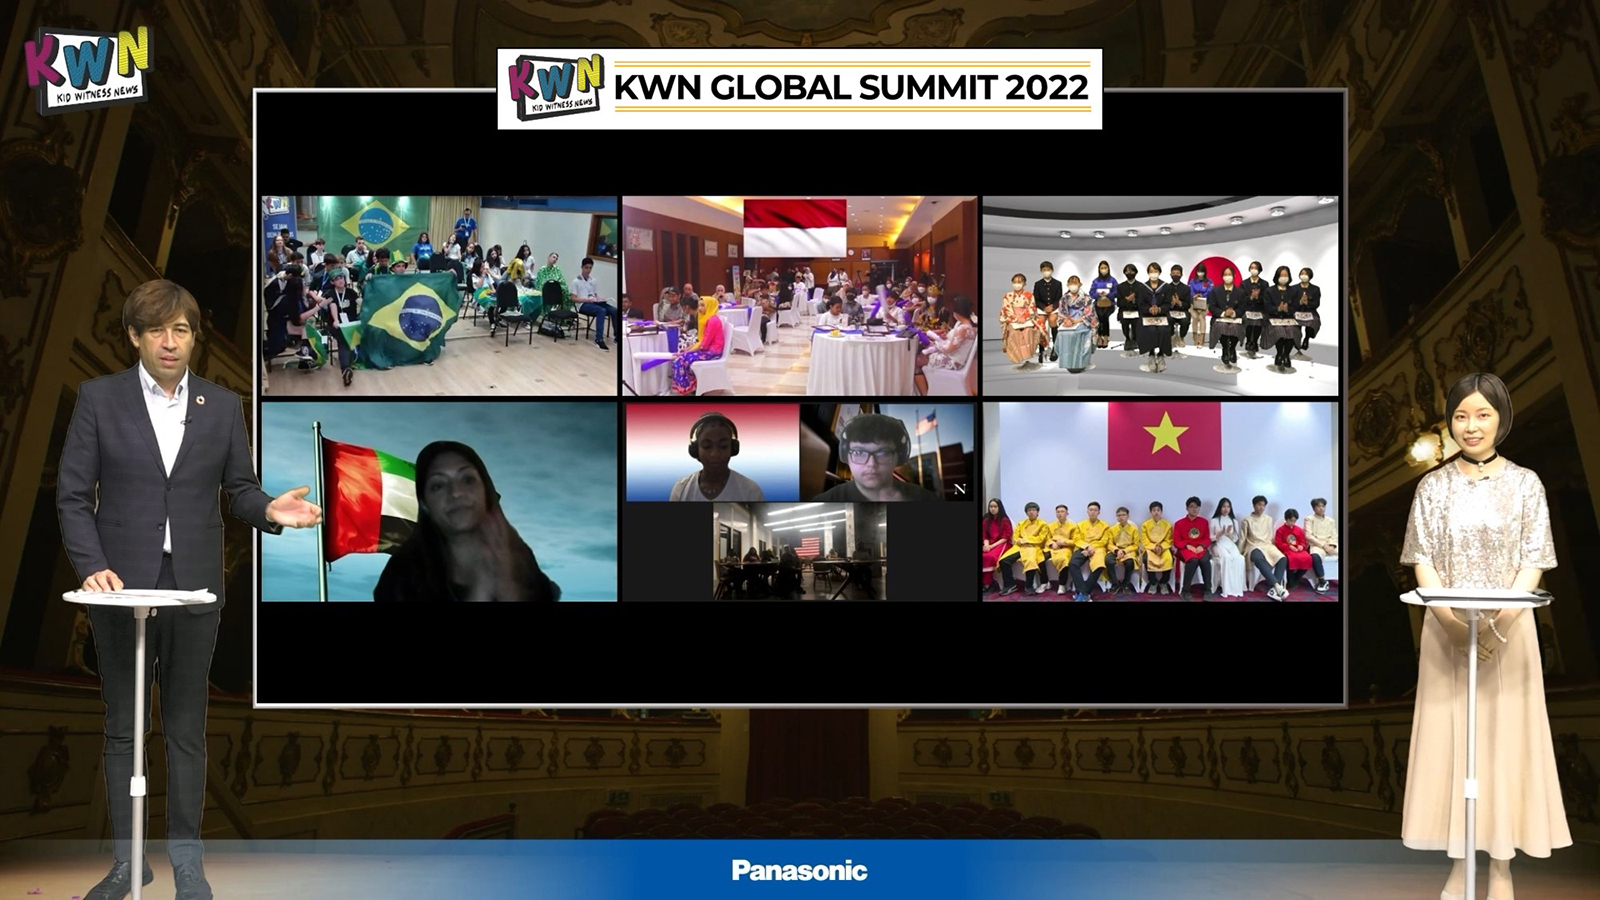 Panasonic Hosts the Kid Witness News (KWN) Global Summit 2022